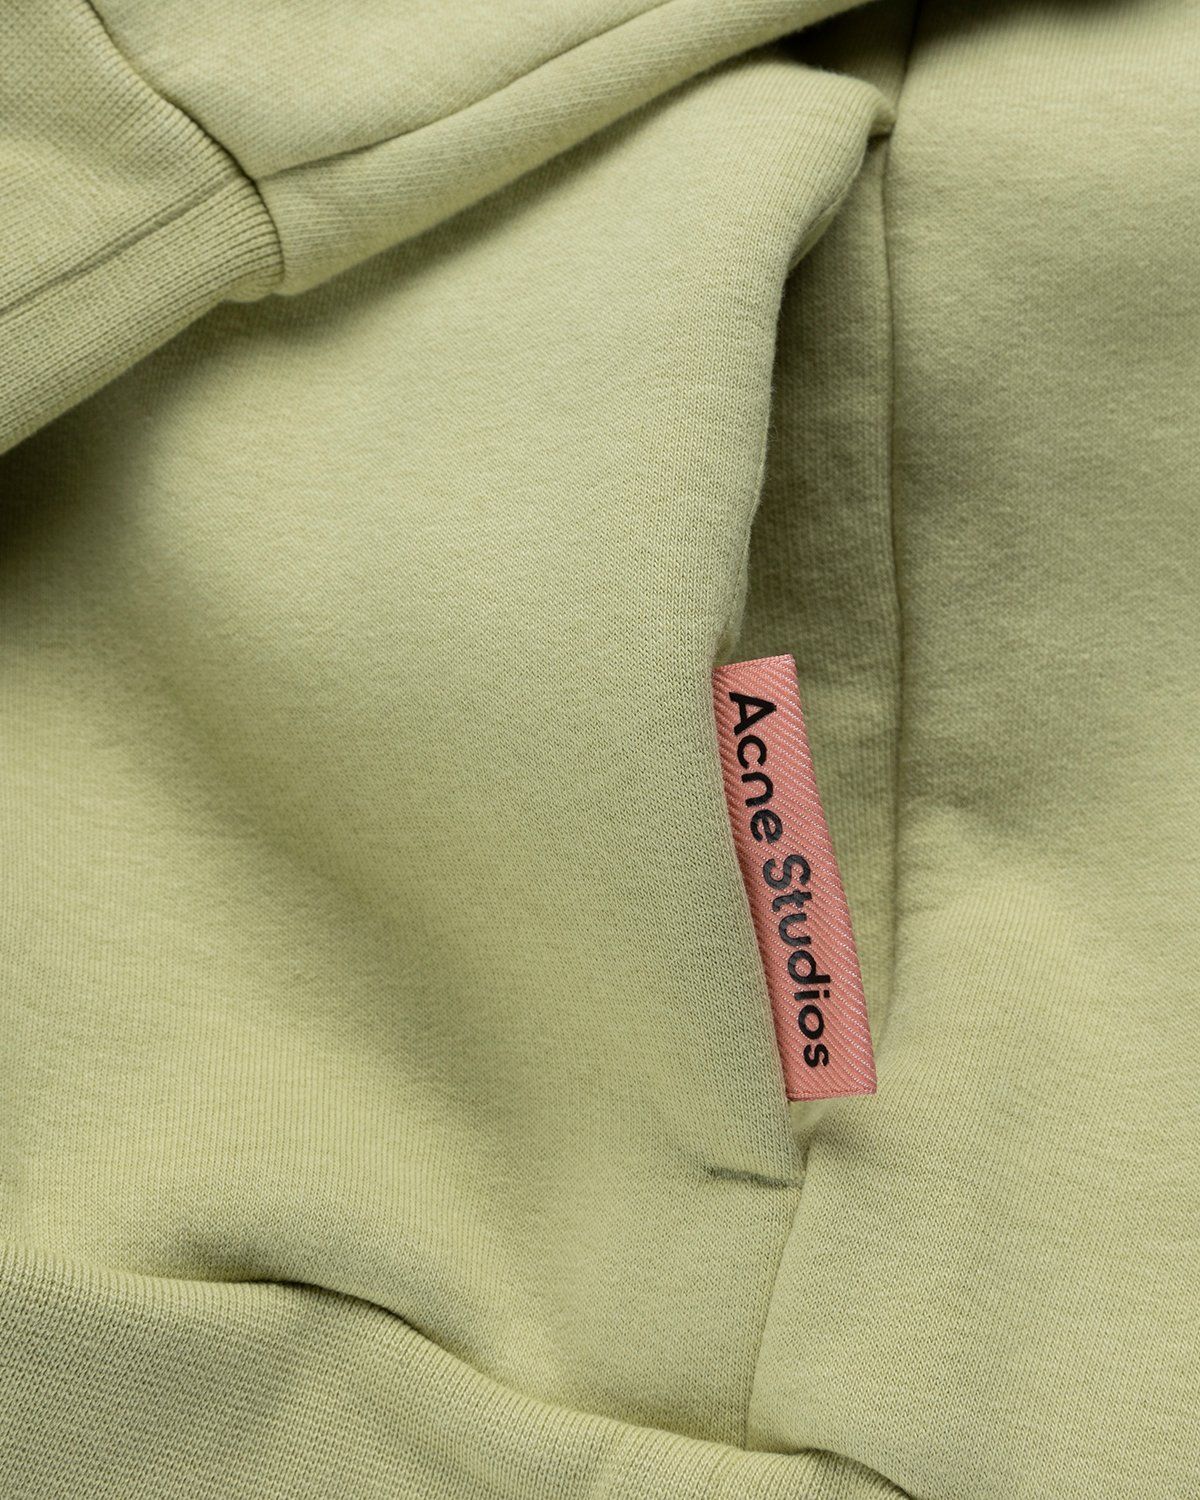 Acne Studios – Midweight Fleece Hooded Sweatshirt Pale Green - Image 4